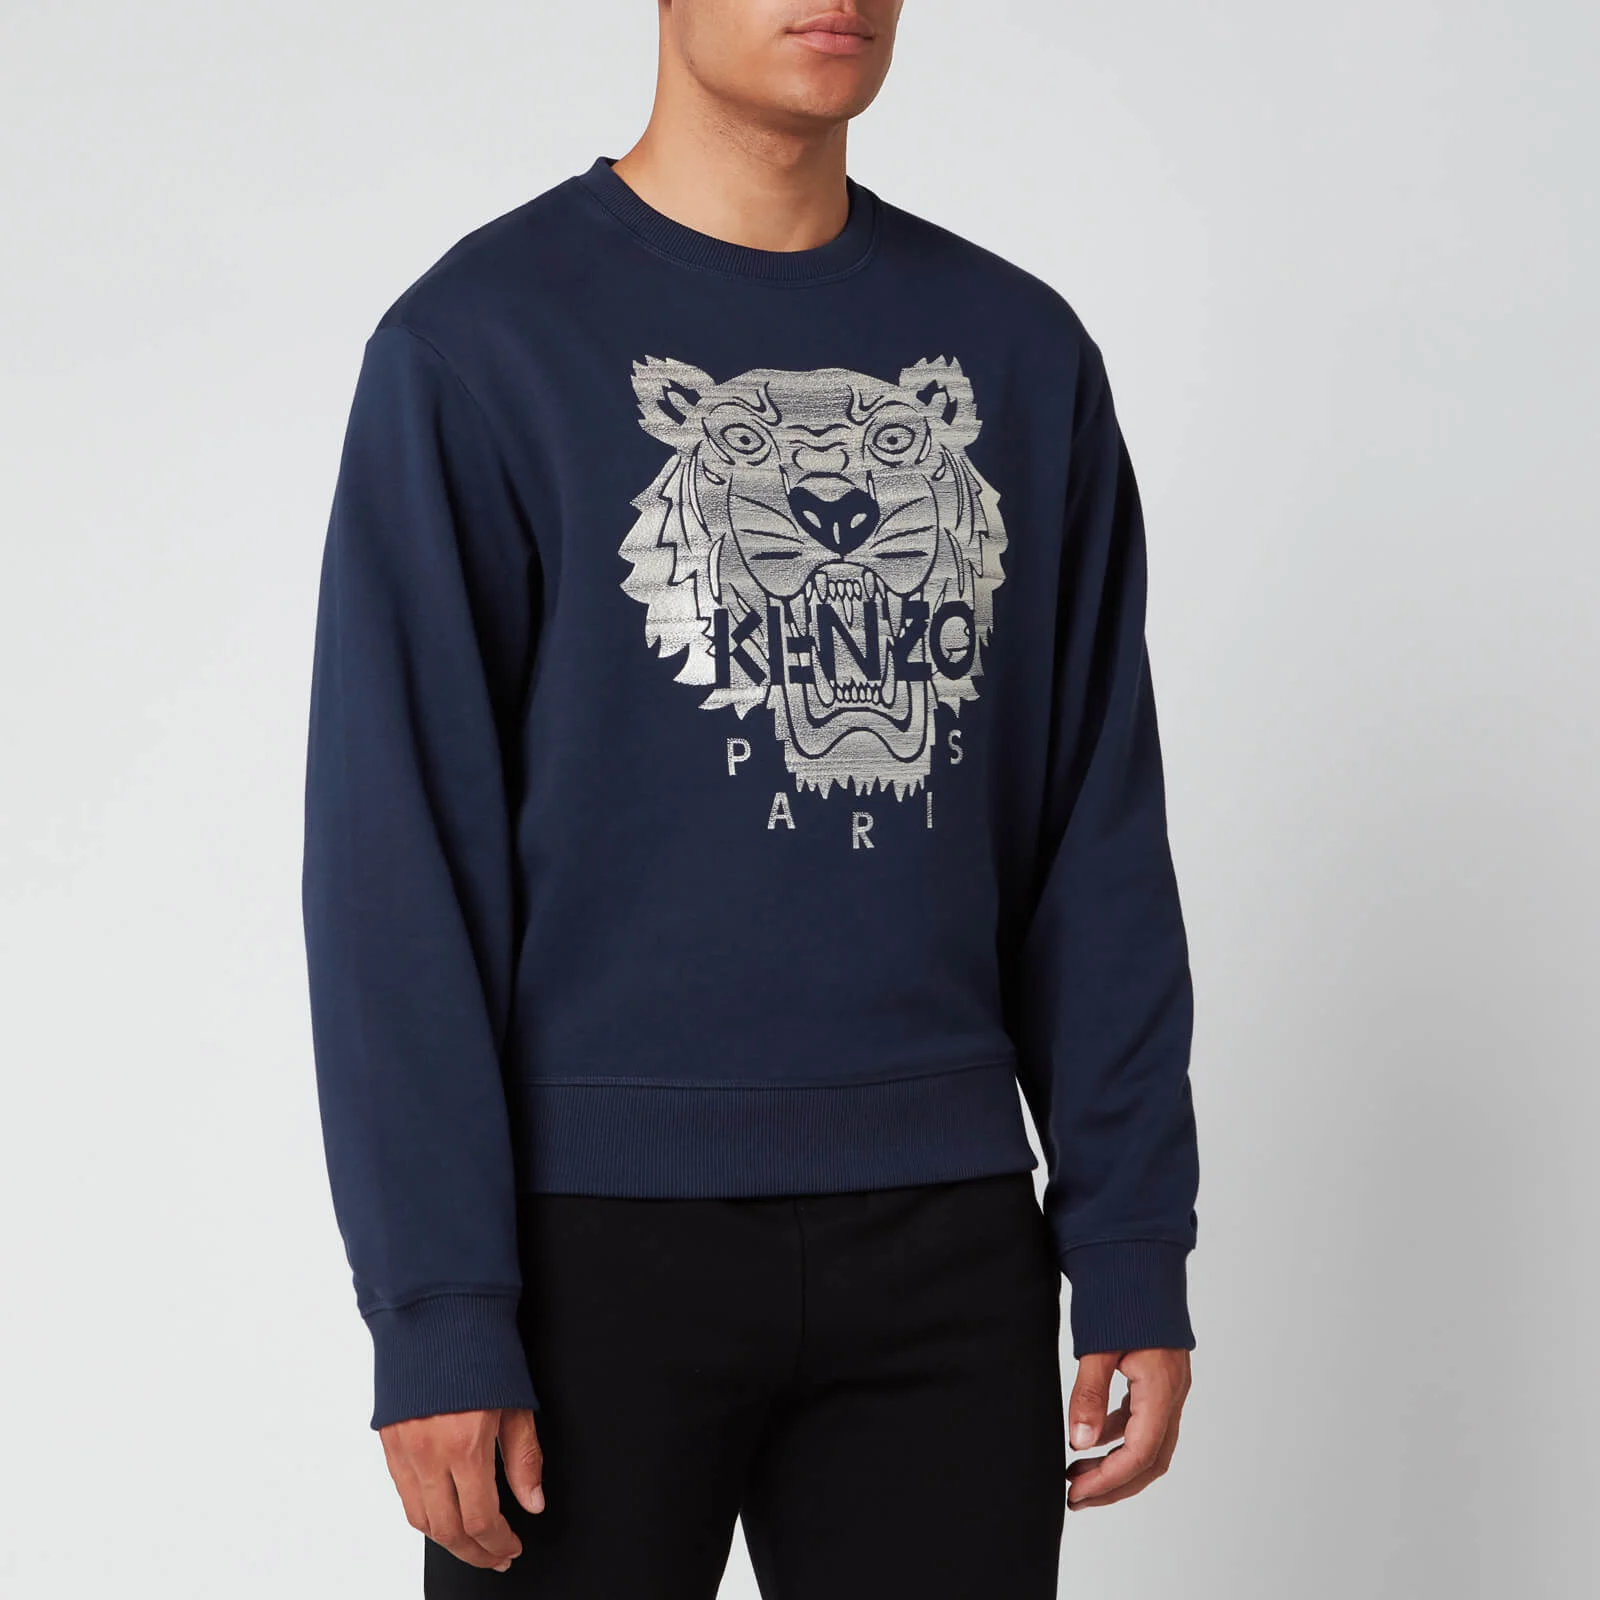 KENZO Men's Stitched Tiger Sweatshirt - Navy Blue Image 1